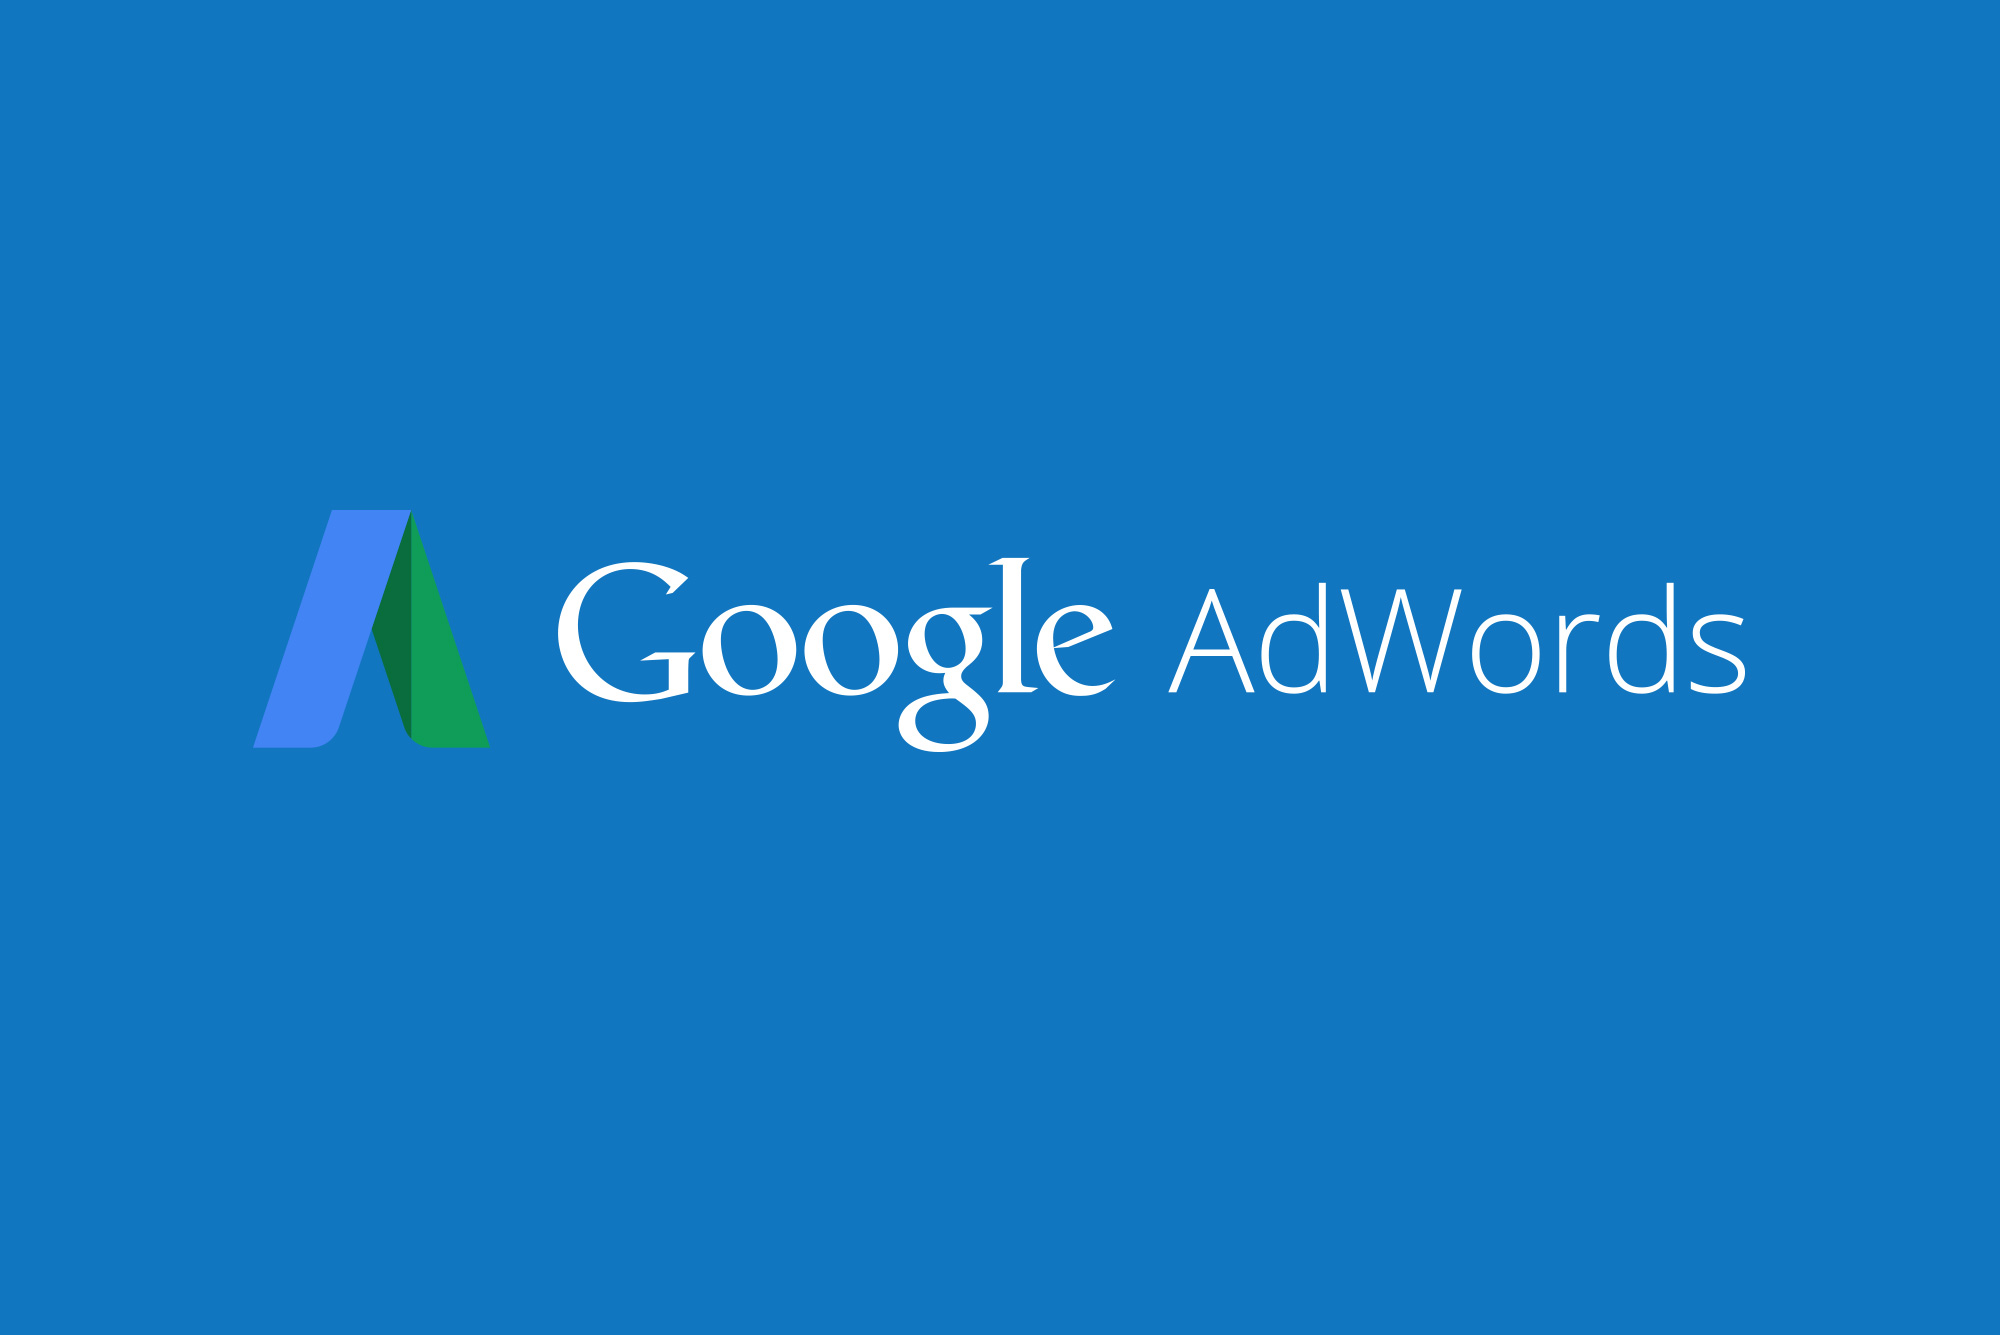 Google AdWords logo on blue background